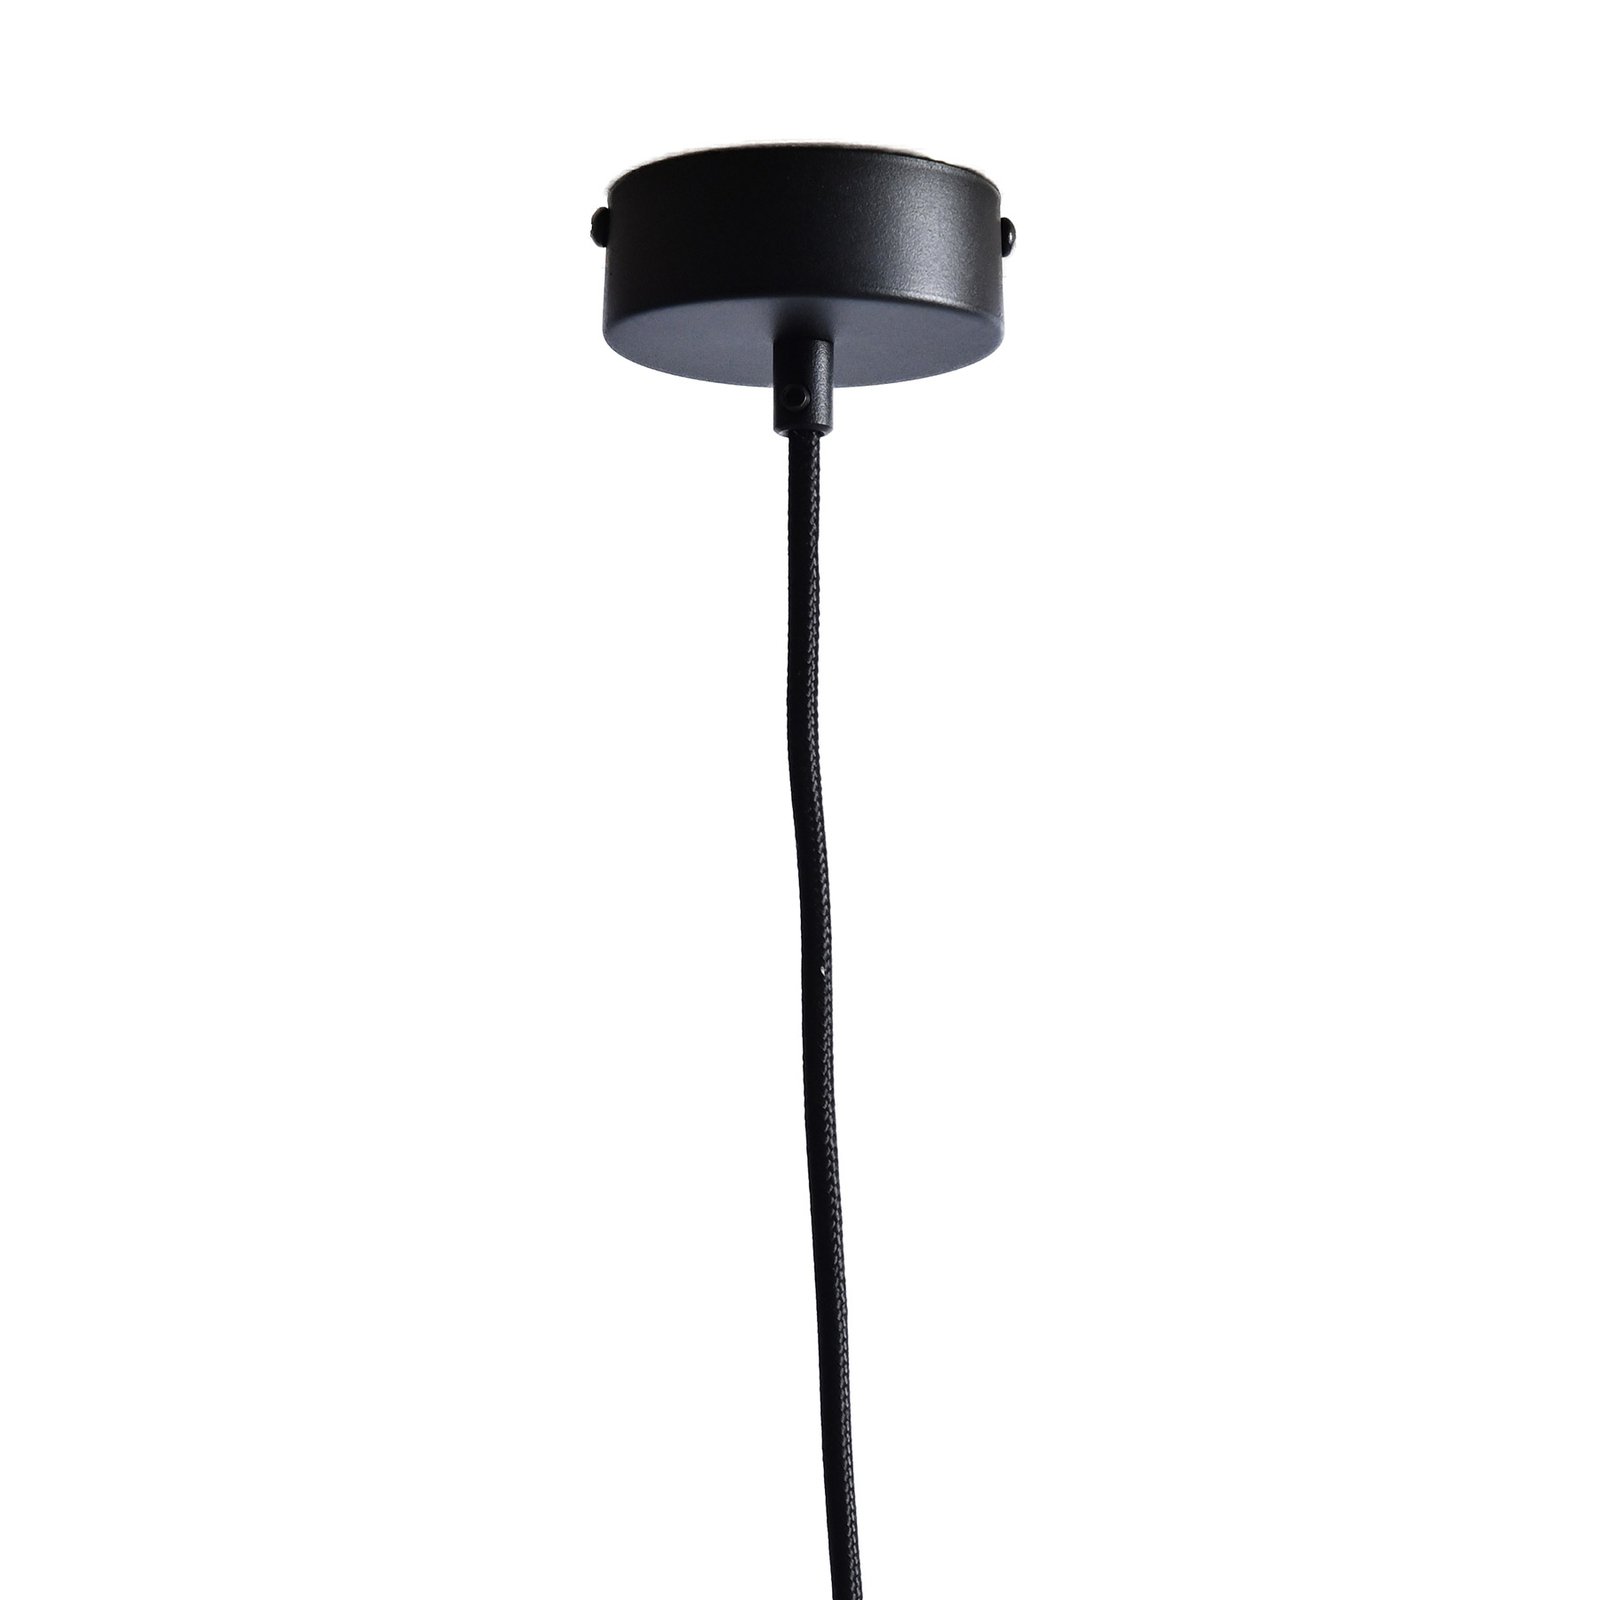 LeuchtNatur Nux hanglamp, populier/zwart